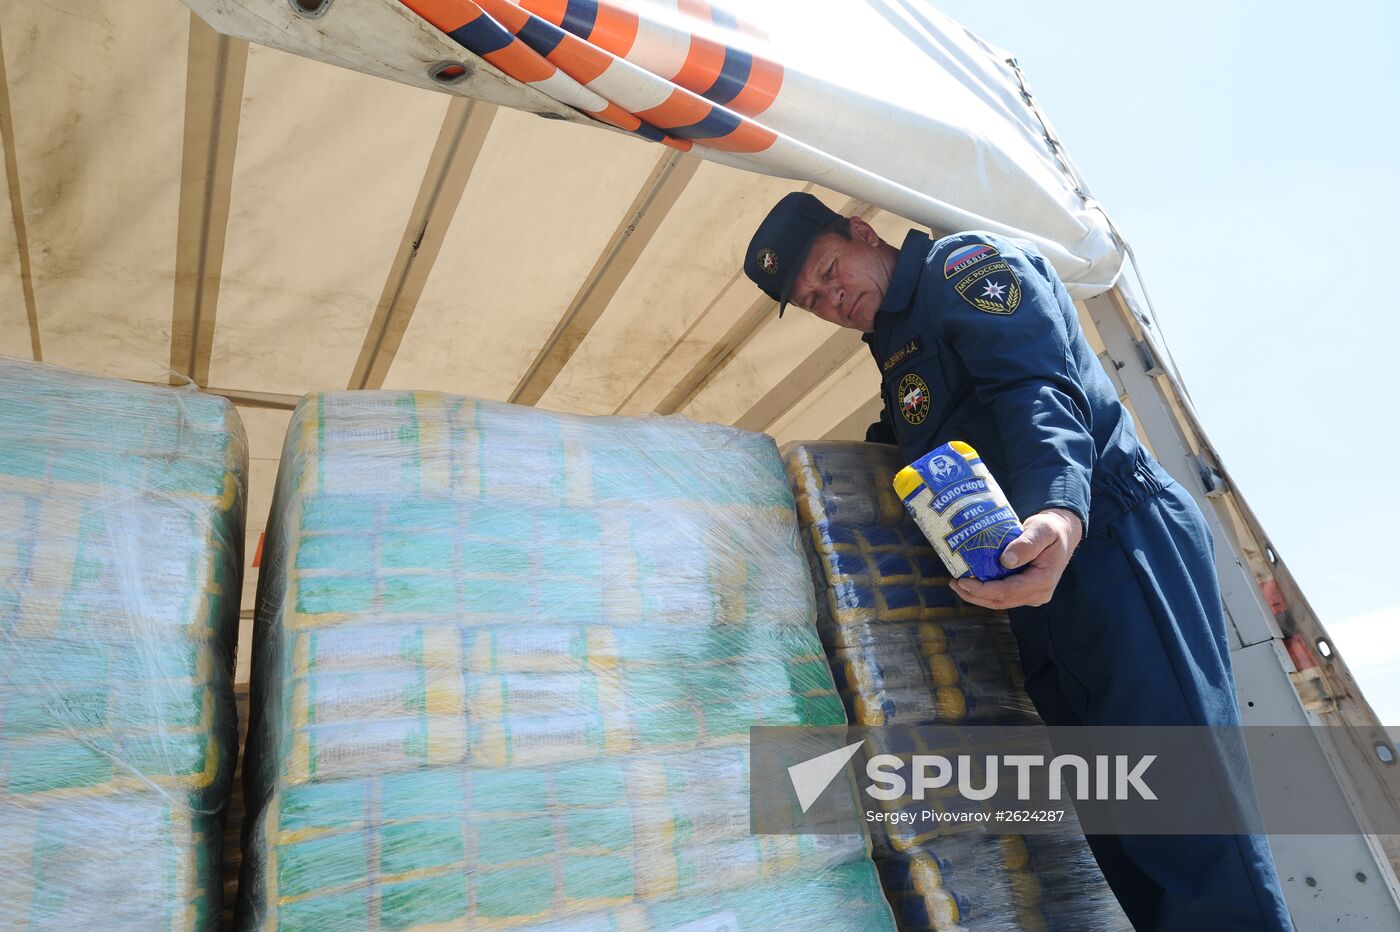 Humanitarian aid convoy in Rostov Region prepares to depart for southeastern Ukraine